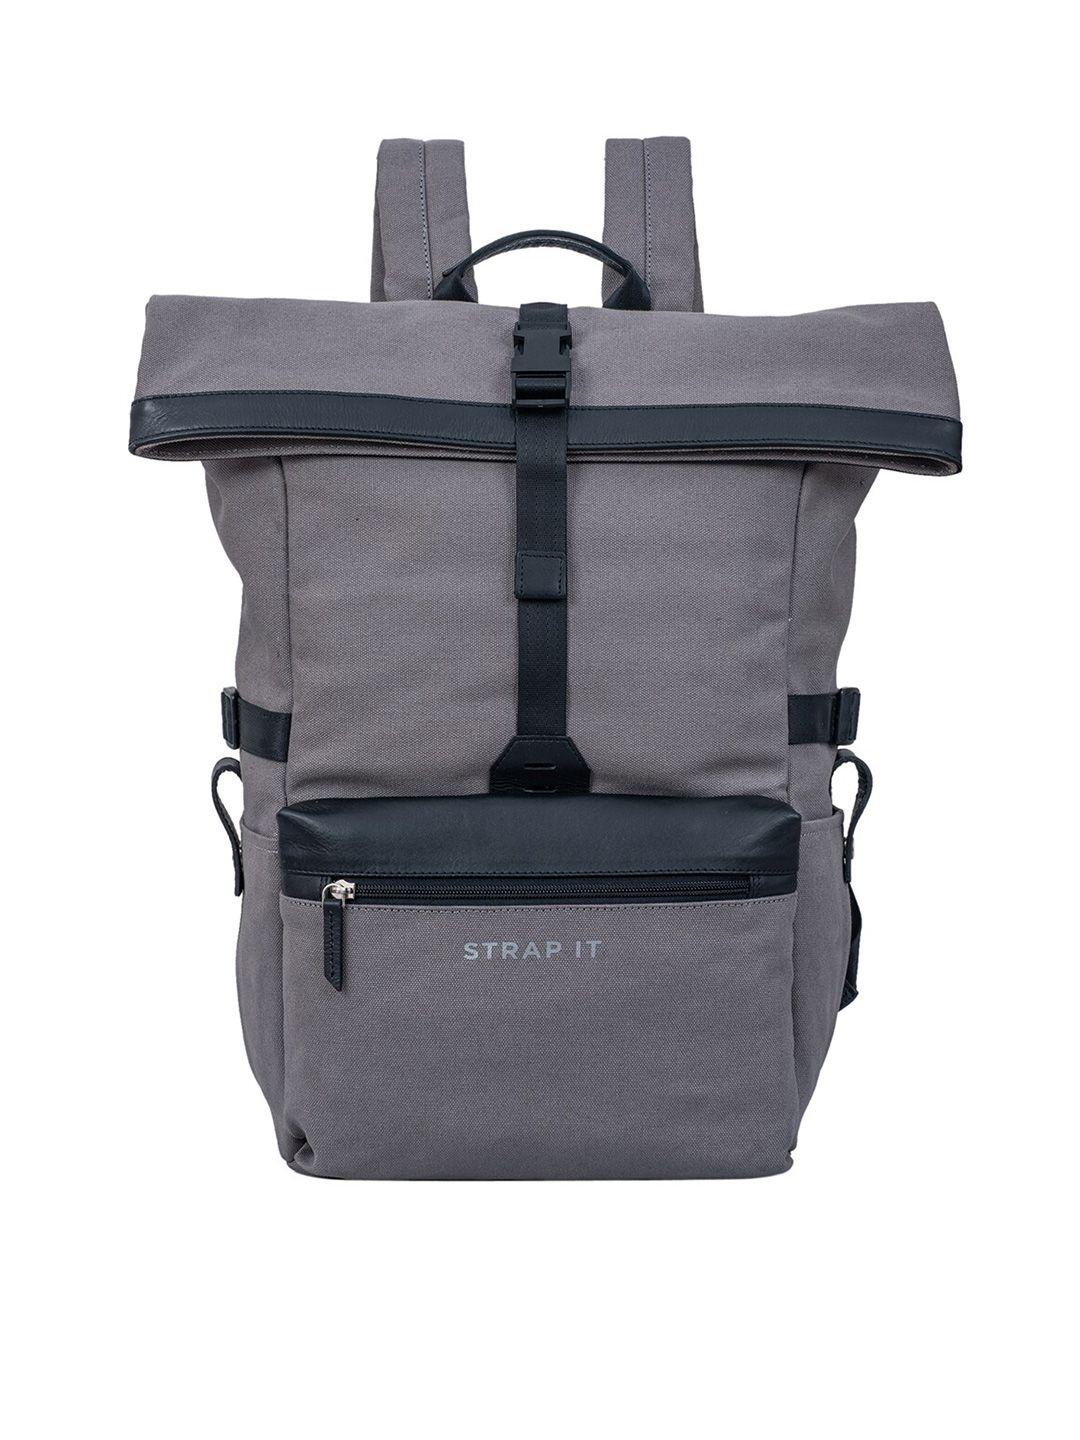 strap it unisex grey contrast detail durabase 15 inch laptop backpack